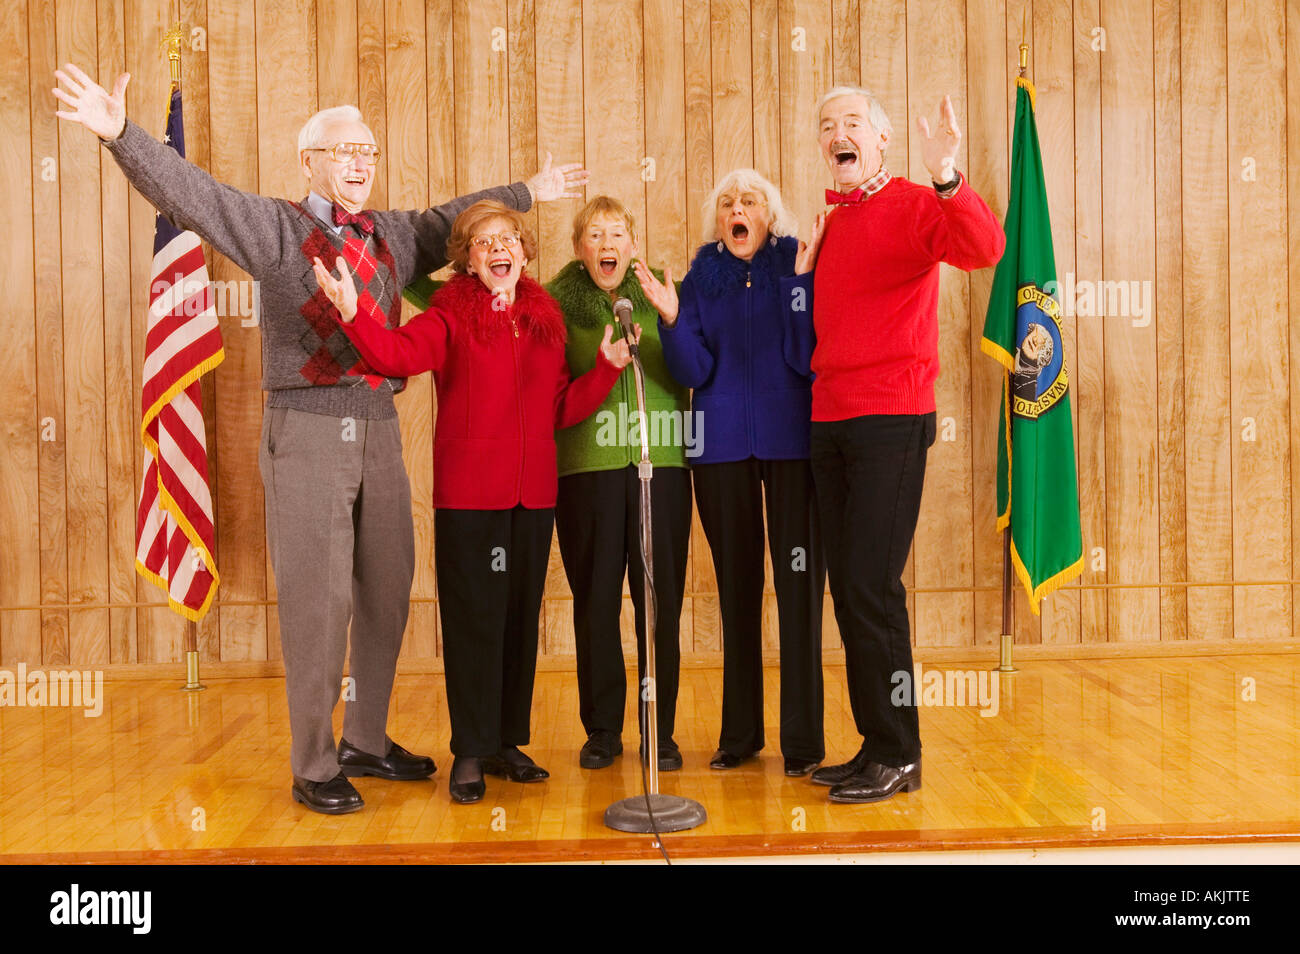 Enthusiastic elderly people singing on stage Stock Photo